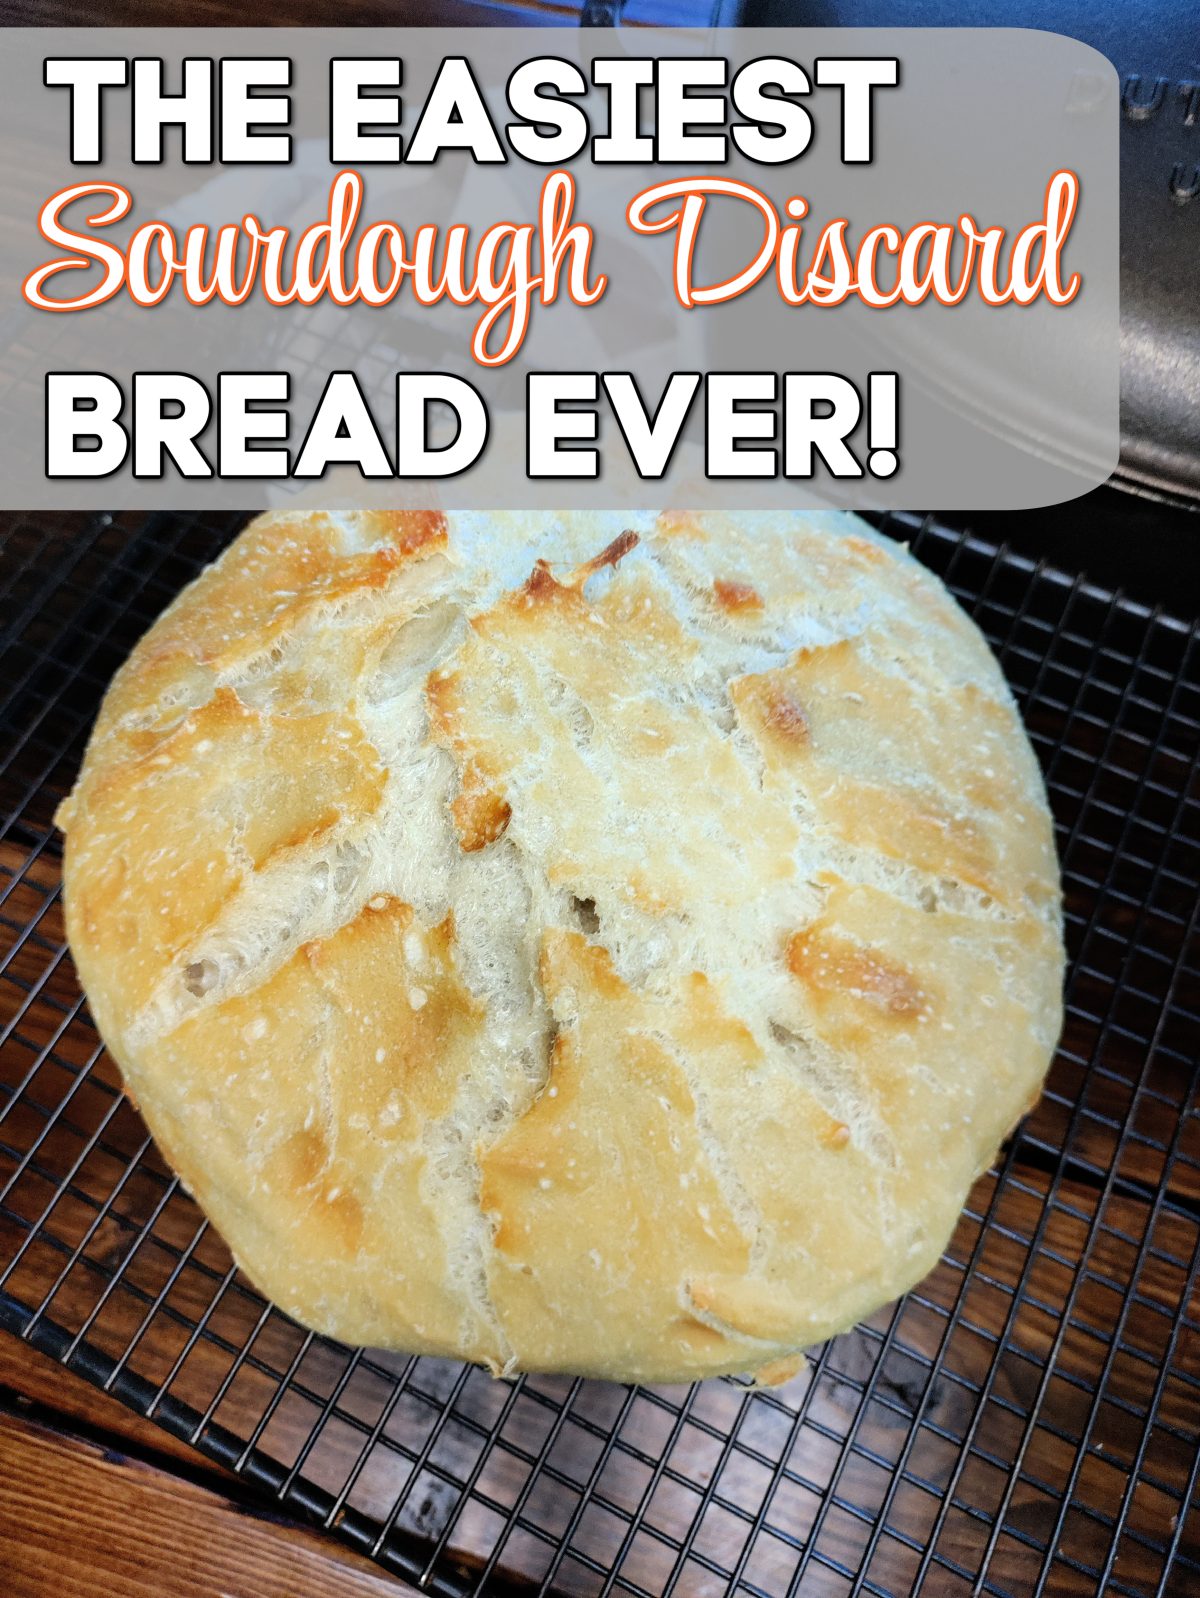 sourdough discard bread with a text overlay that says, "the easiest sourdough discard bread ever"